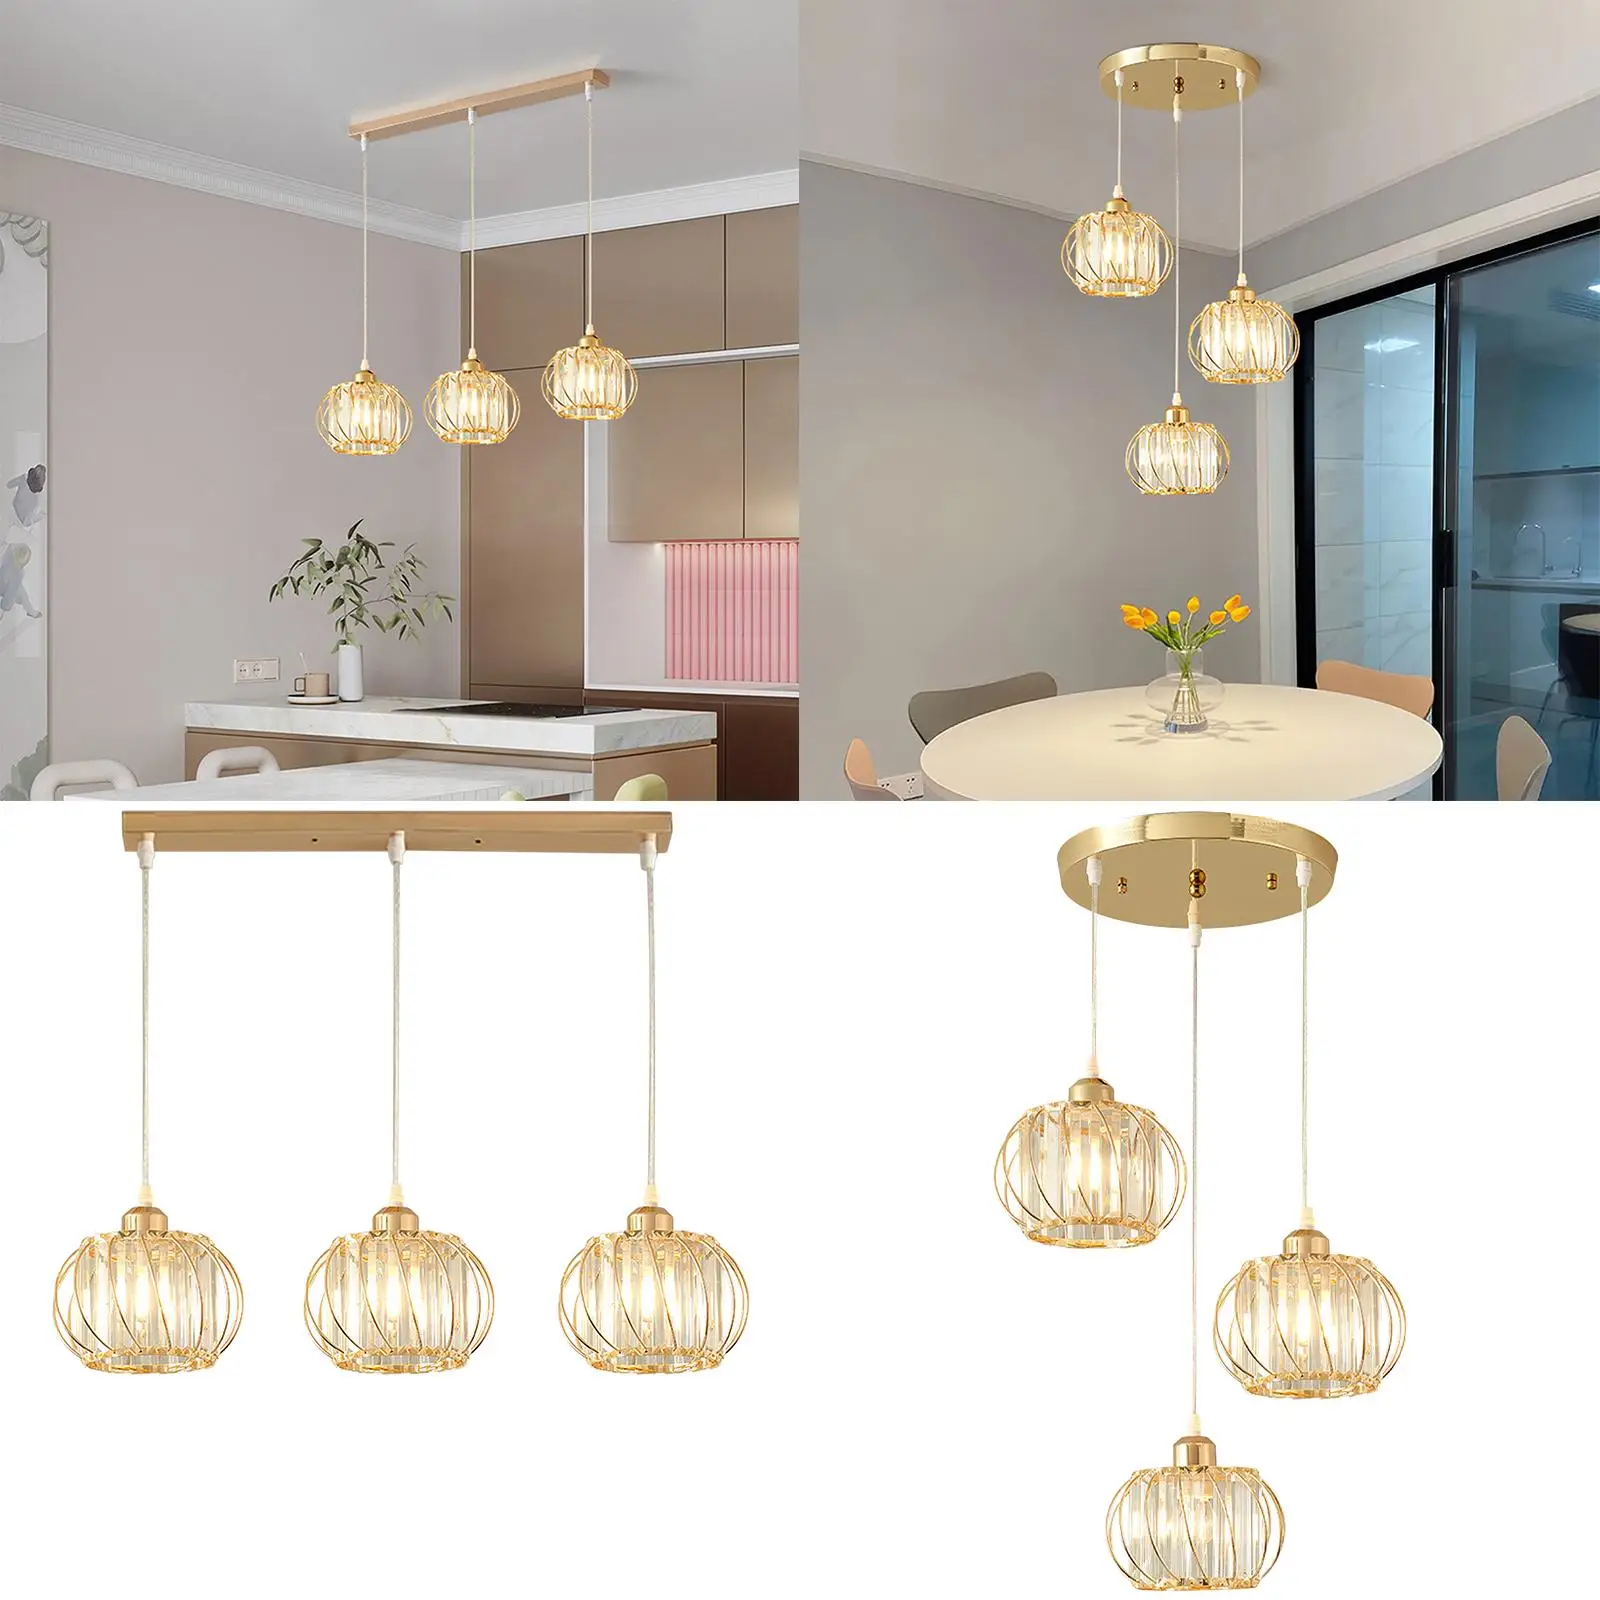  Crystal Pendant Light Fixture, LED Hanging Light, Crystal Chandeliers for Restaurant, Dining Room, Cafe, Bar, Apartment